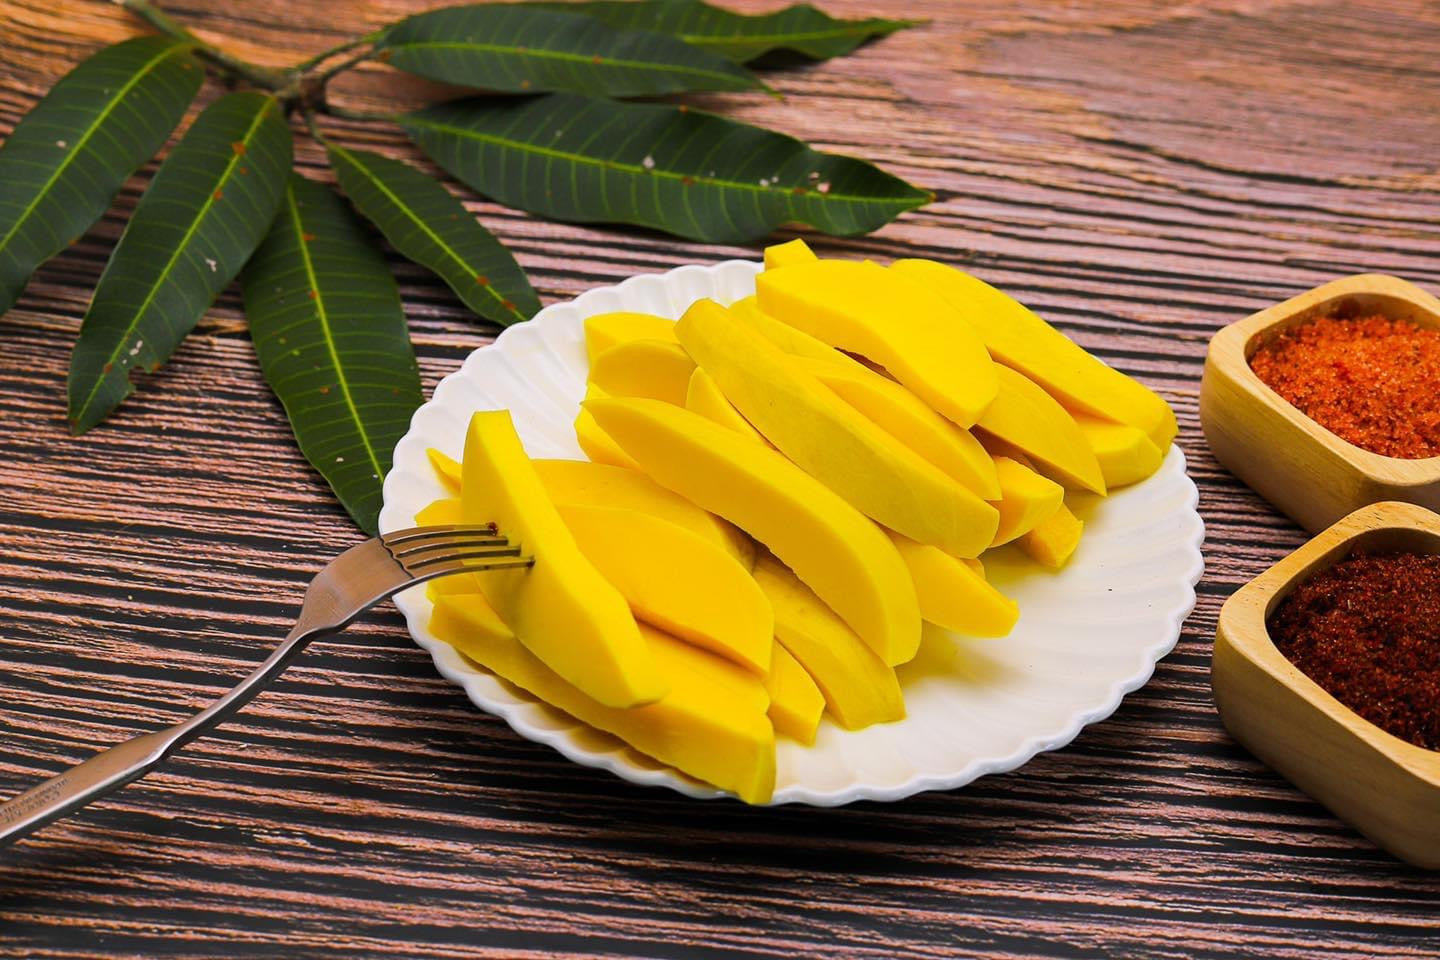 pickled mango-มะม่วงดอง-เจ้ธร